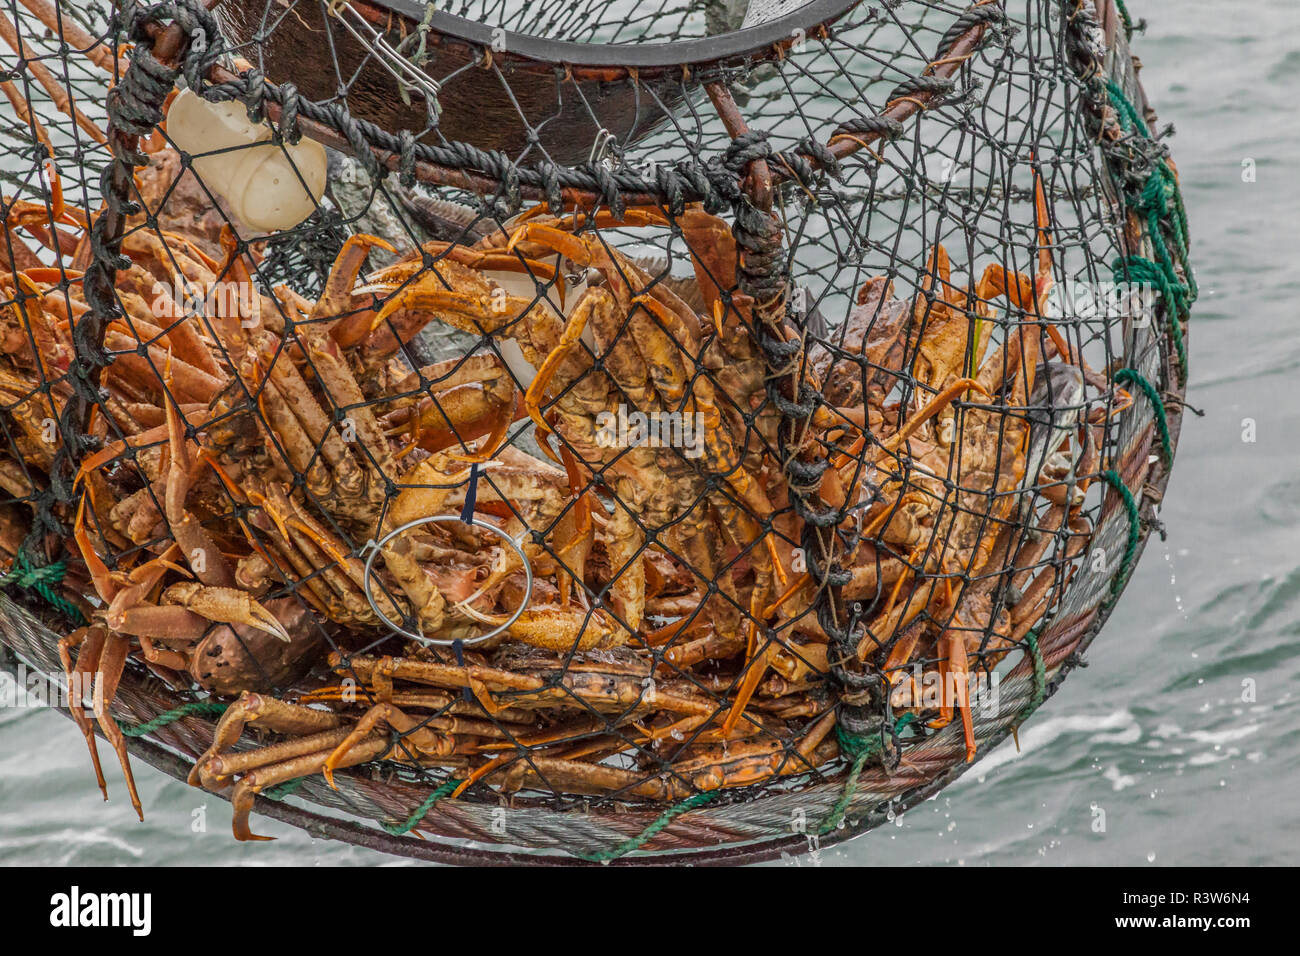 Snow crabs alaska hi-res stock photography and images - Alamy